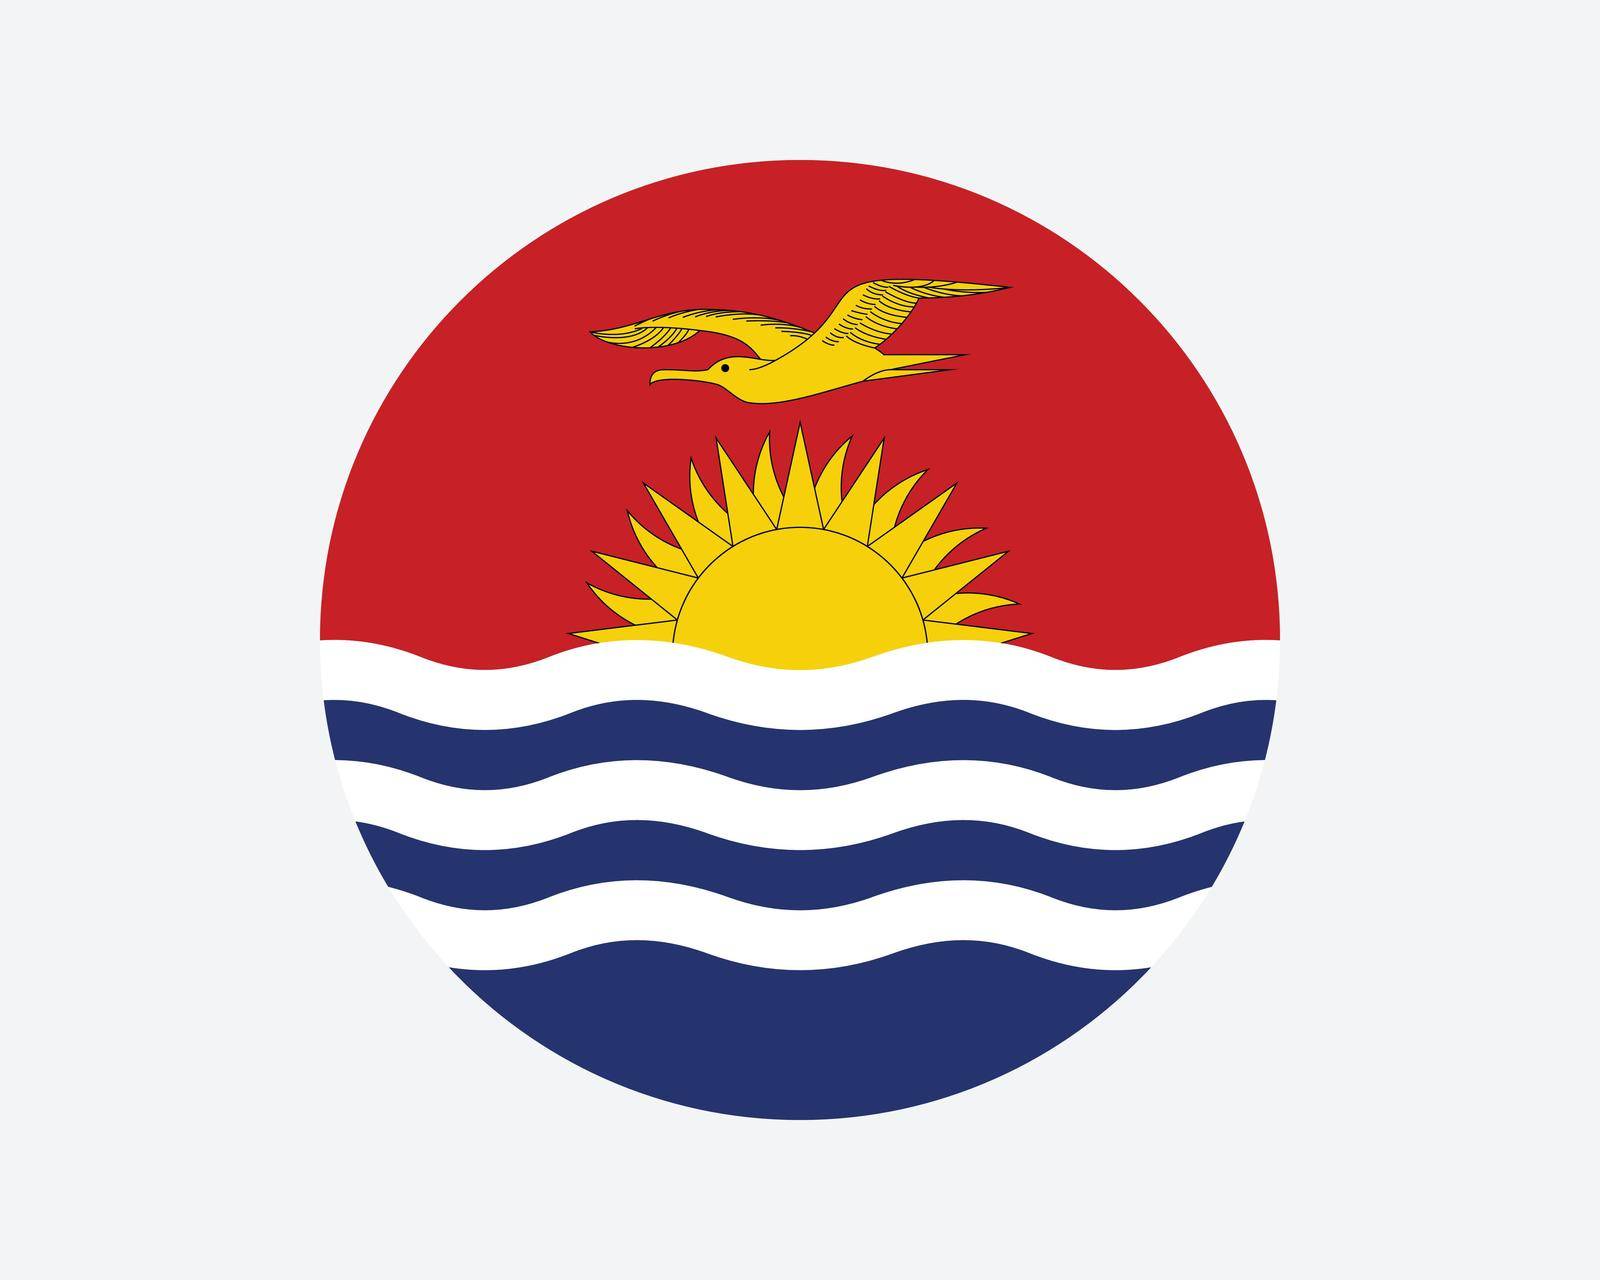 Kiribati Round Country Flag. Kiribati Circle National Flag. Republic of Kiribati Circular Shape Button Banner. EPS Vector Illustration.